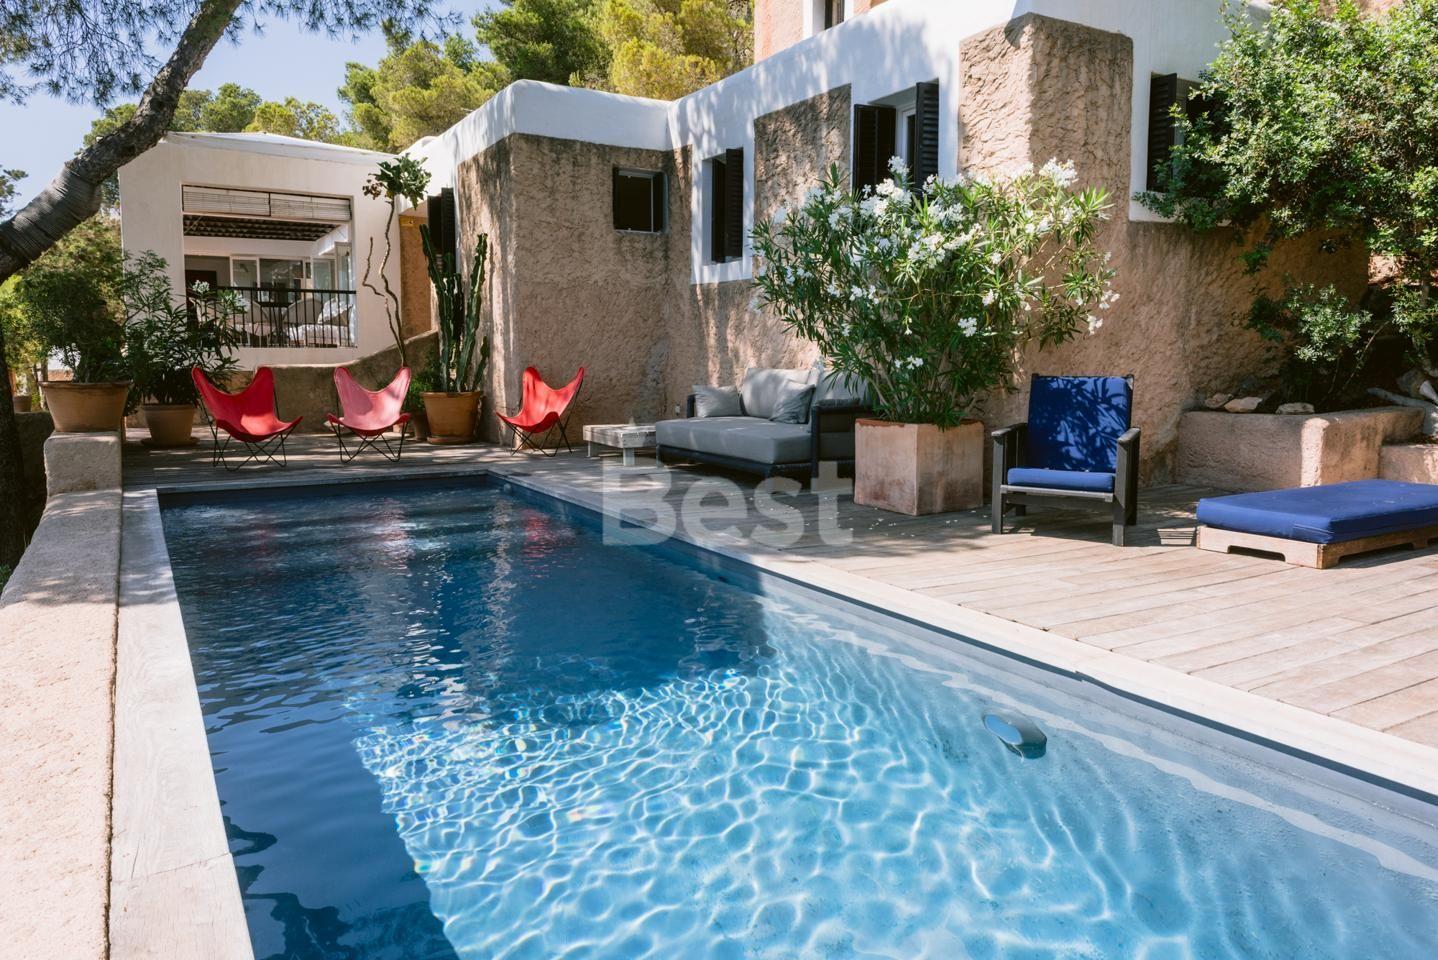 Propiedad en alquiler Can Pep Simo, JESUS, Ibiza. Vacation villa for hire designed by famous architect Jose Luis Sert